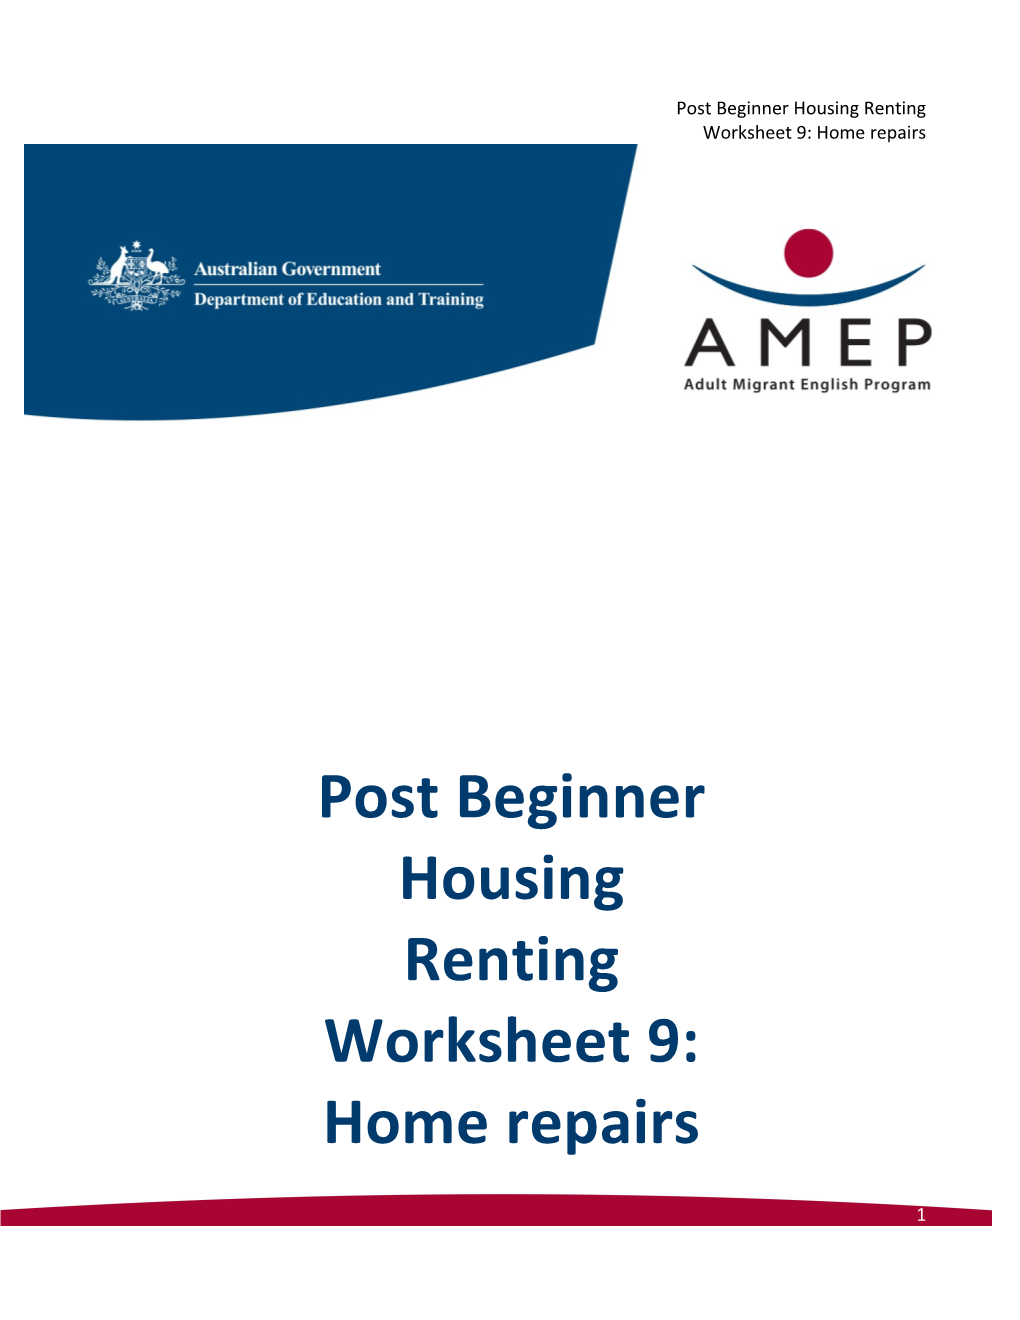 Post Beginner Housing Renting Worksheet 9: Home Repairs